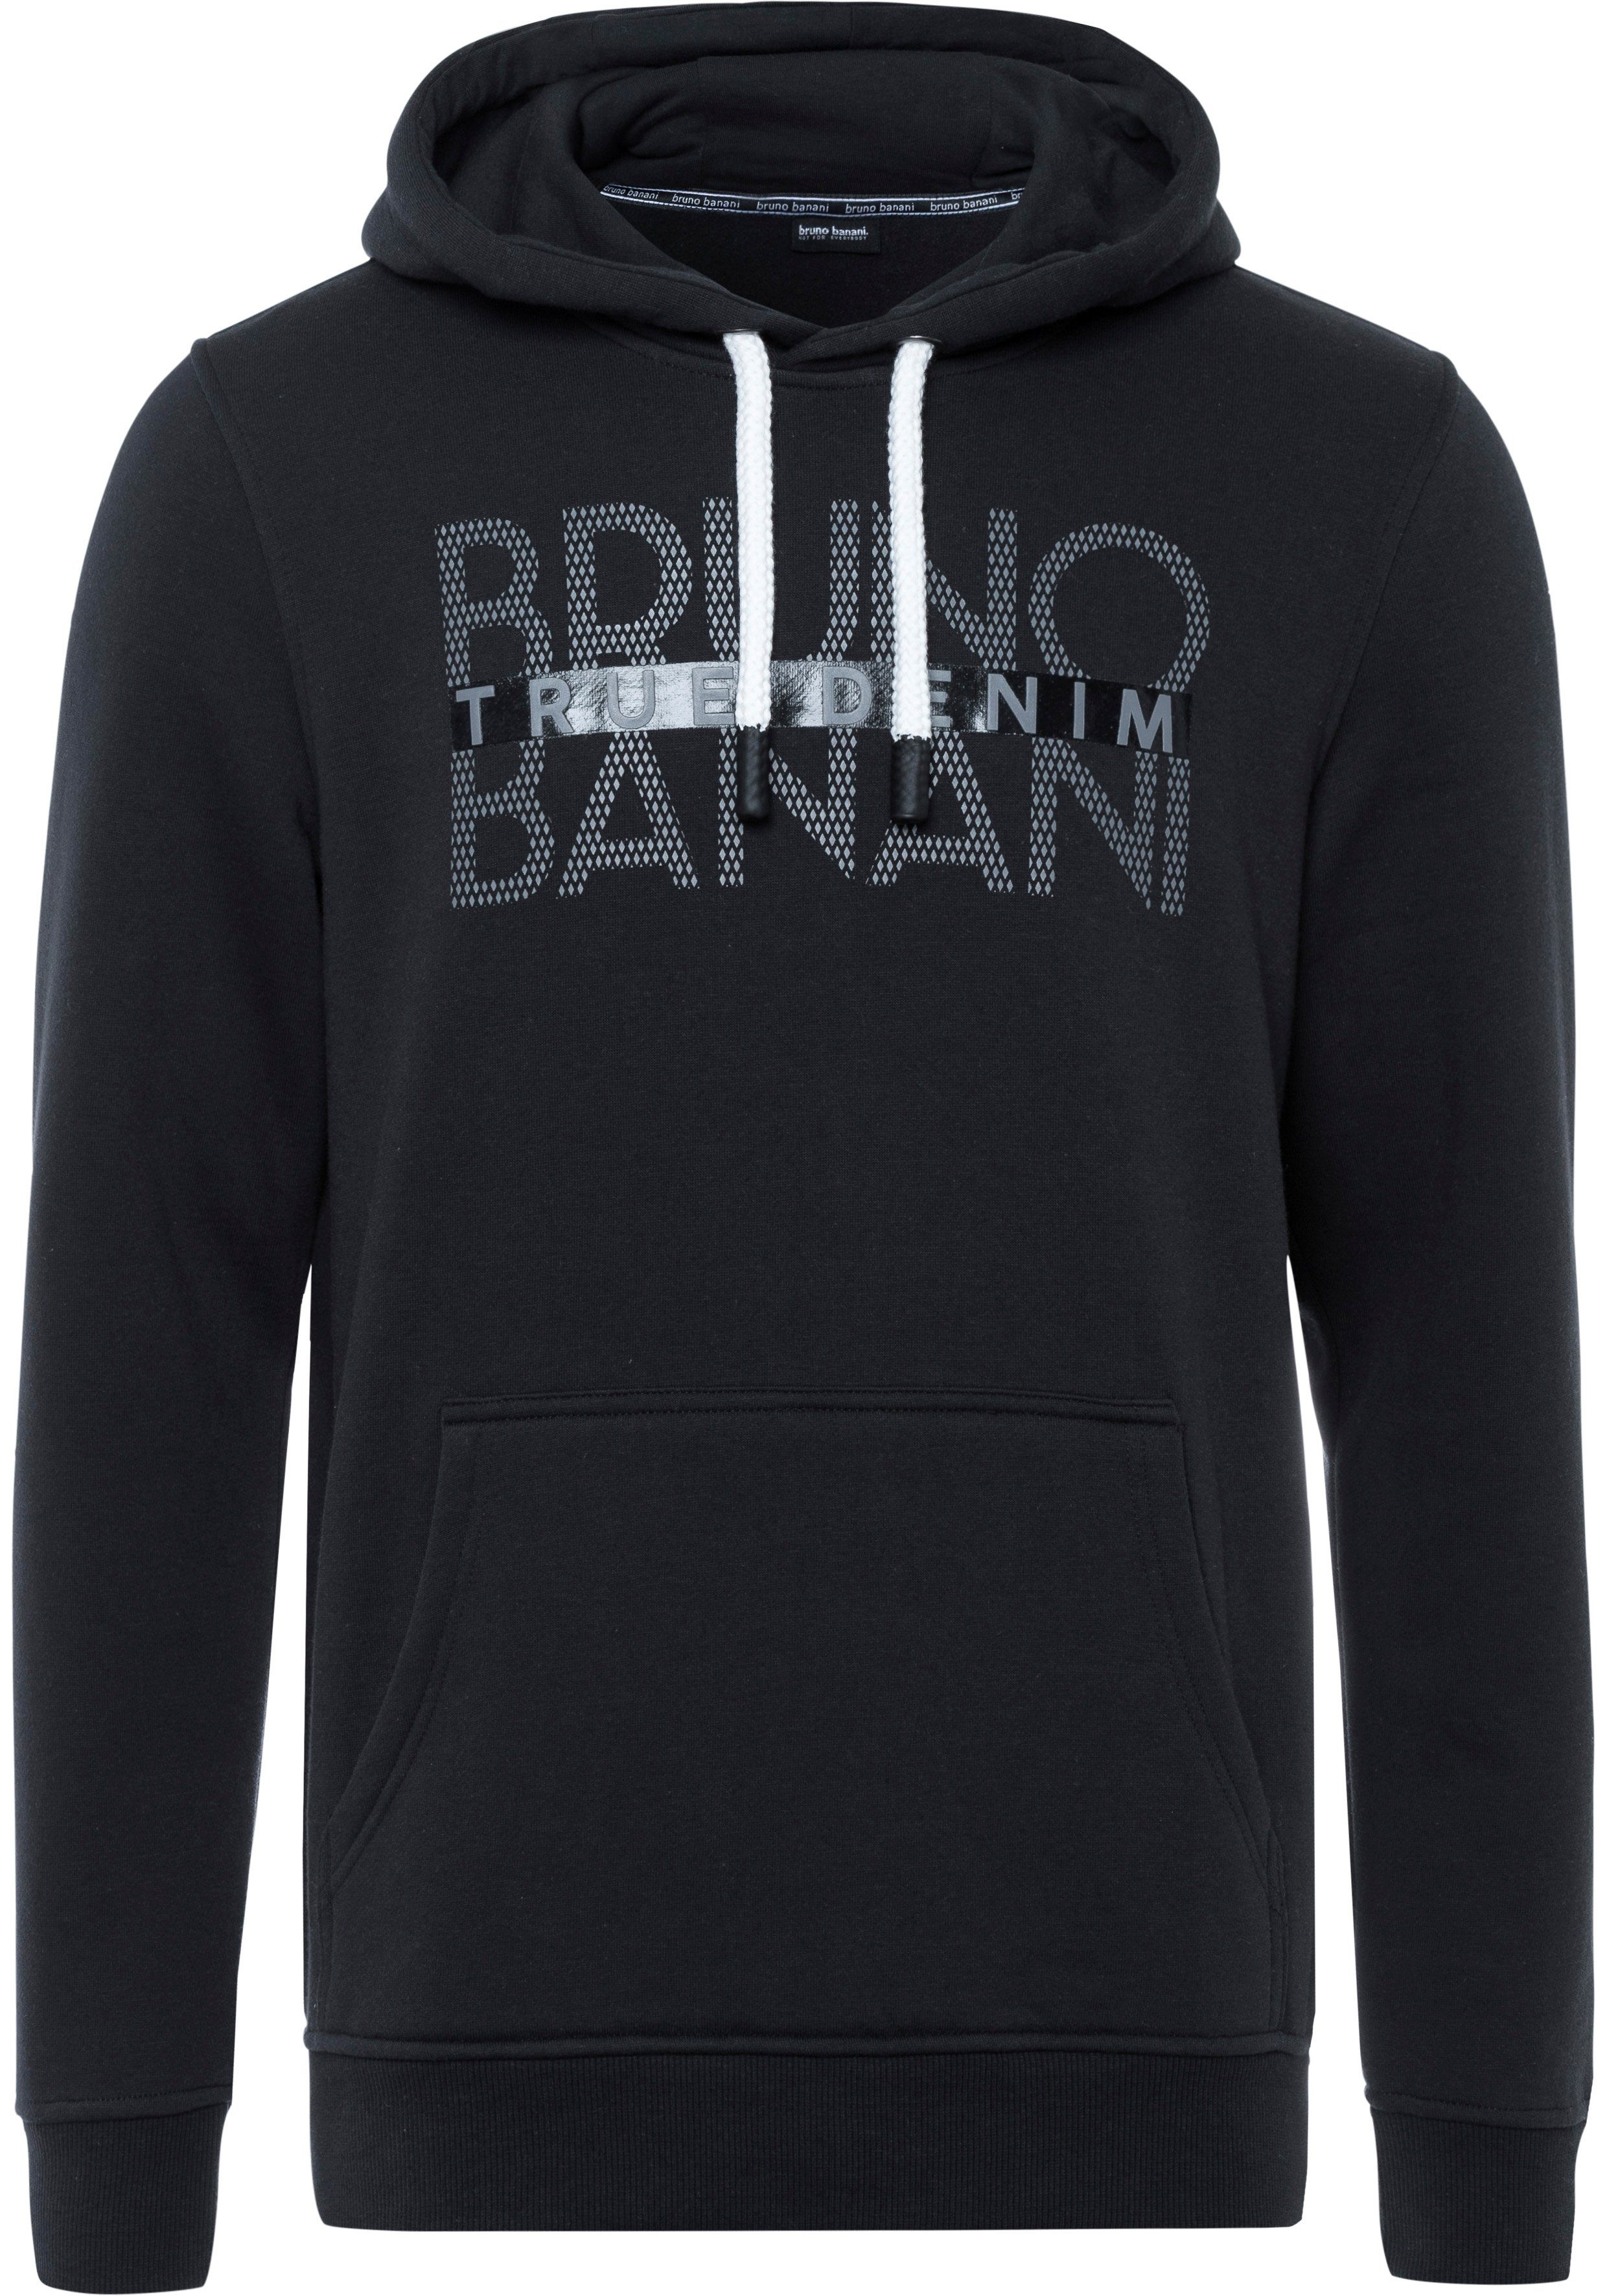 Bruno Banani Kapuzensweatshirt schwarz vorne Logoprint